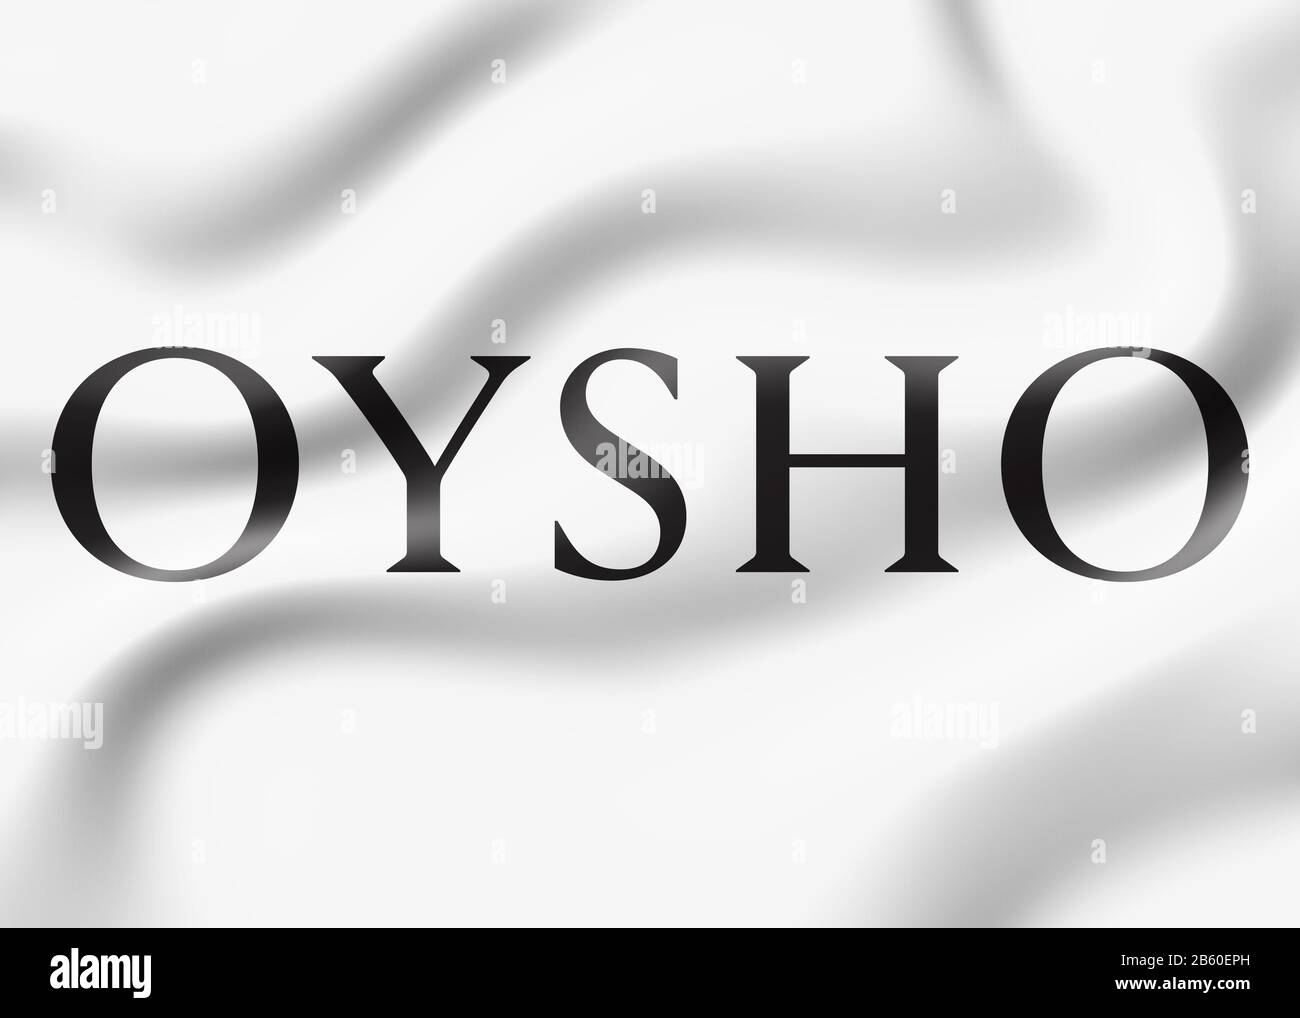 Oyshosport Projects :: Photos, videos, logos, illustrations and